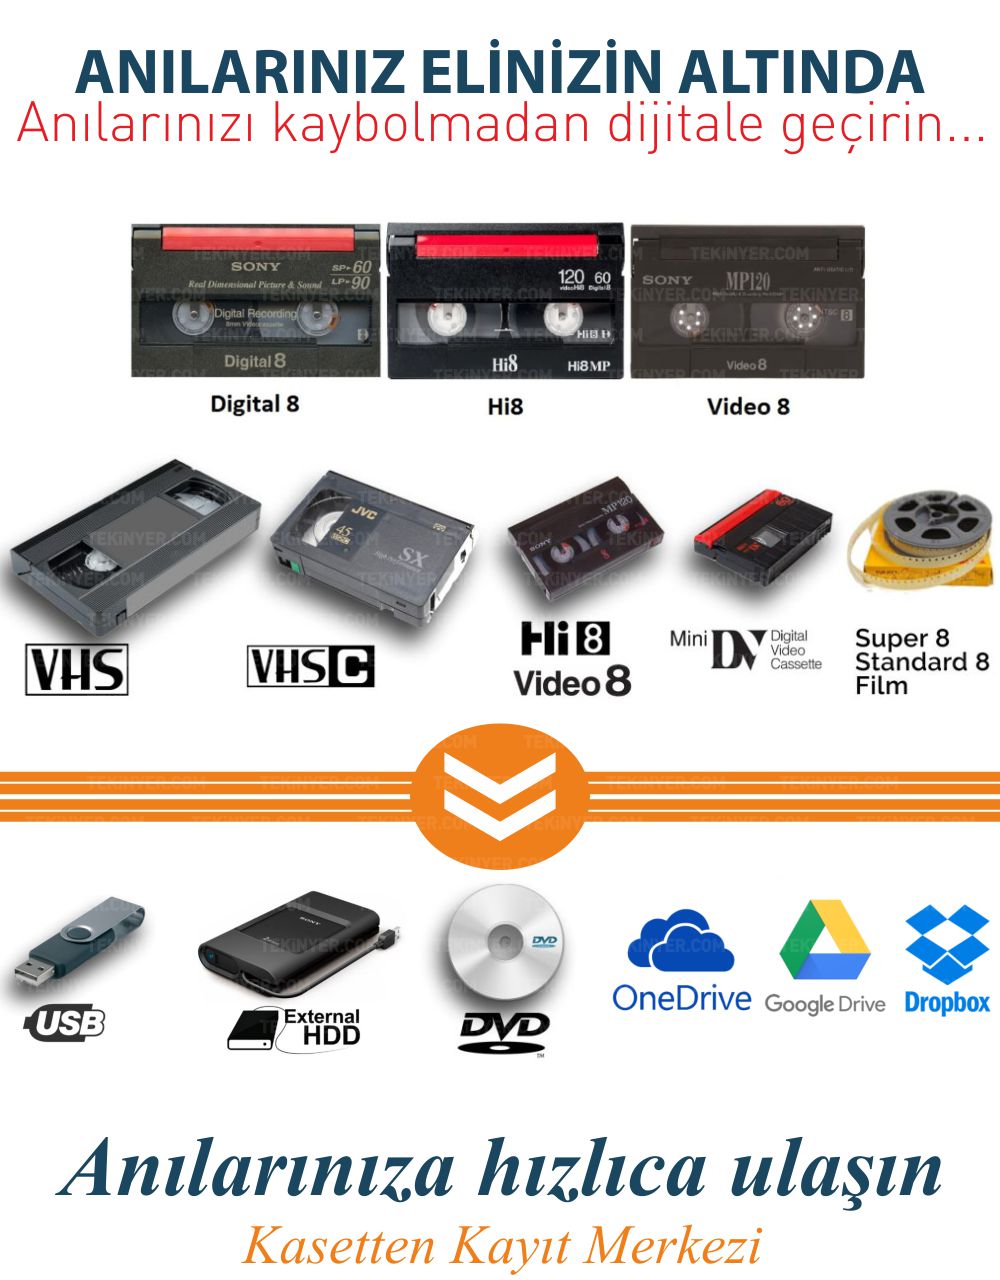 Vhs Betamax Hi8 Dijital8 Mini DV Kasetten Aktarma Kaset Film Bant Resim